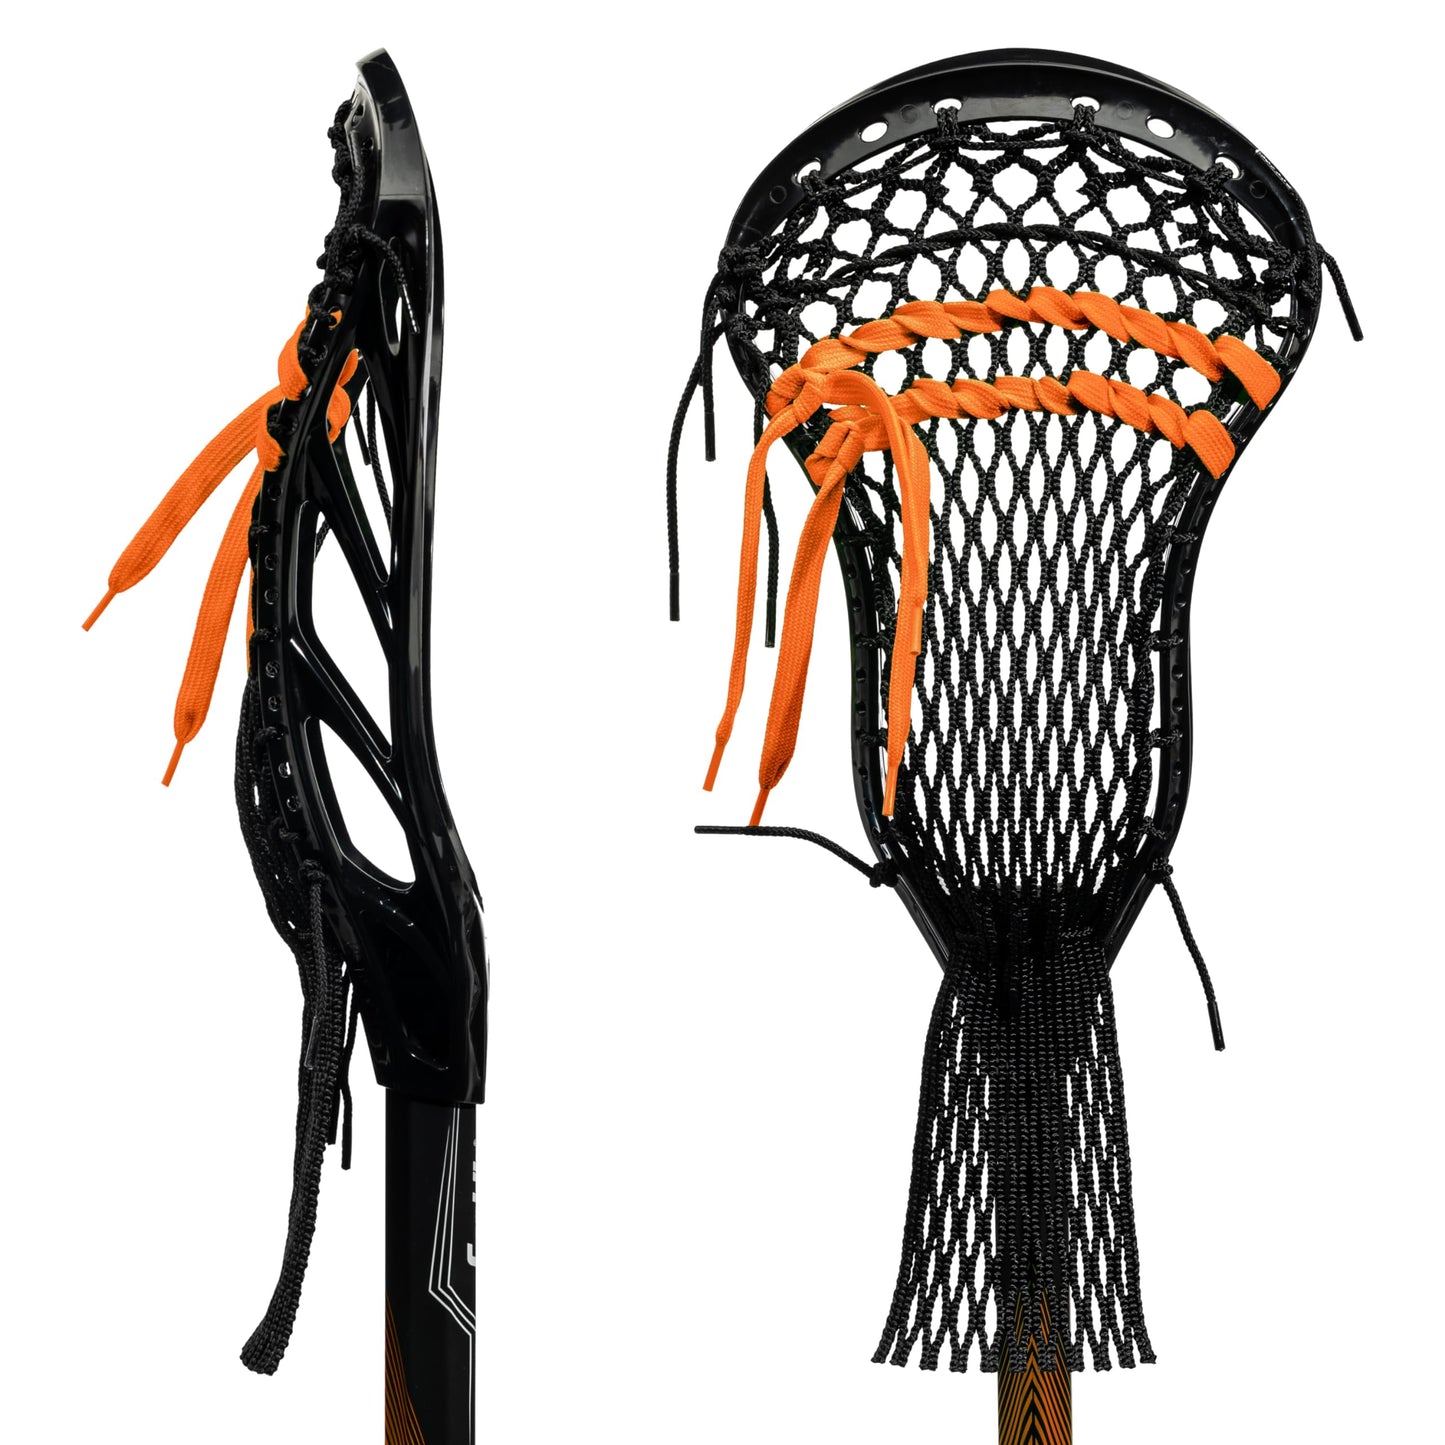 Sports Ambush Men's + Women's Lacrosse Sticks